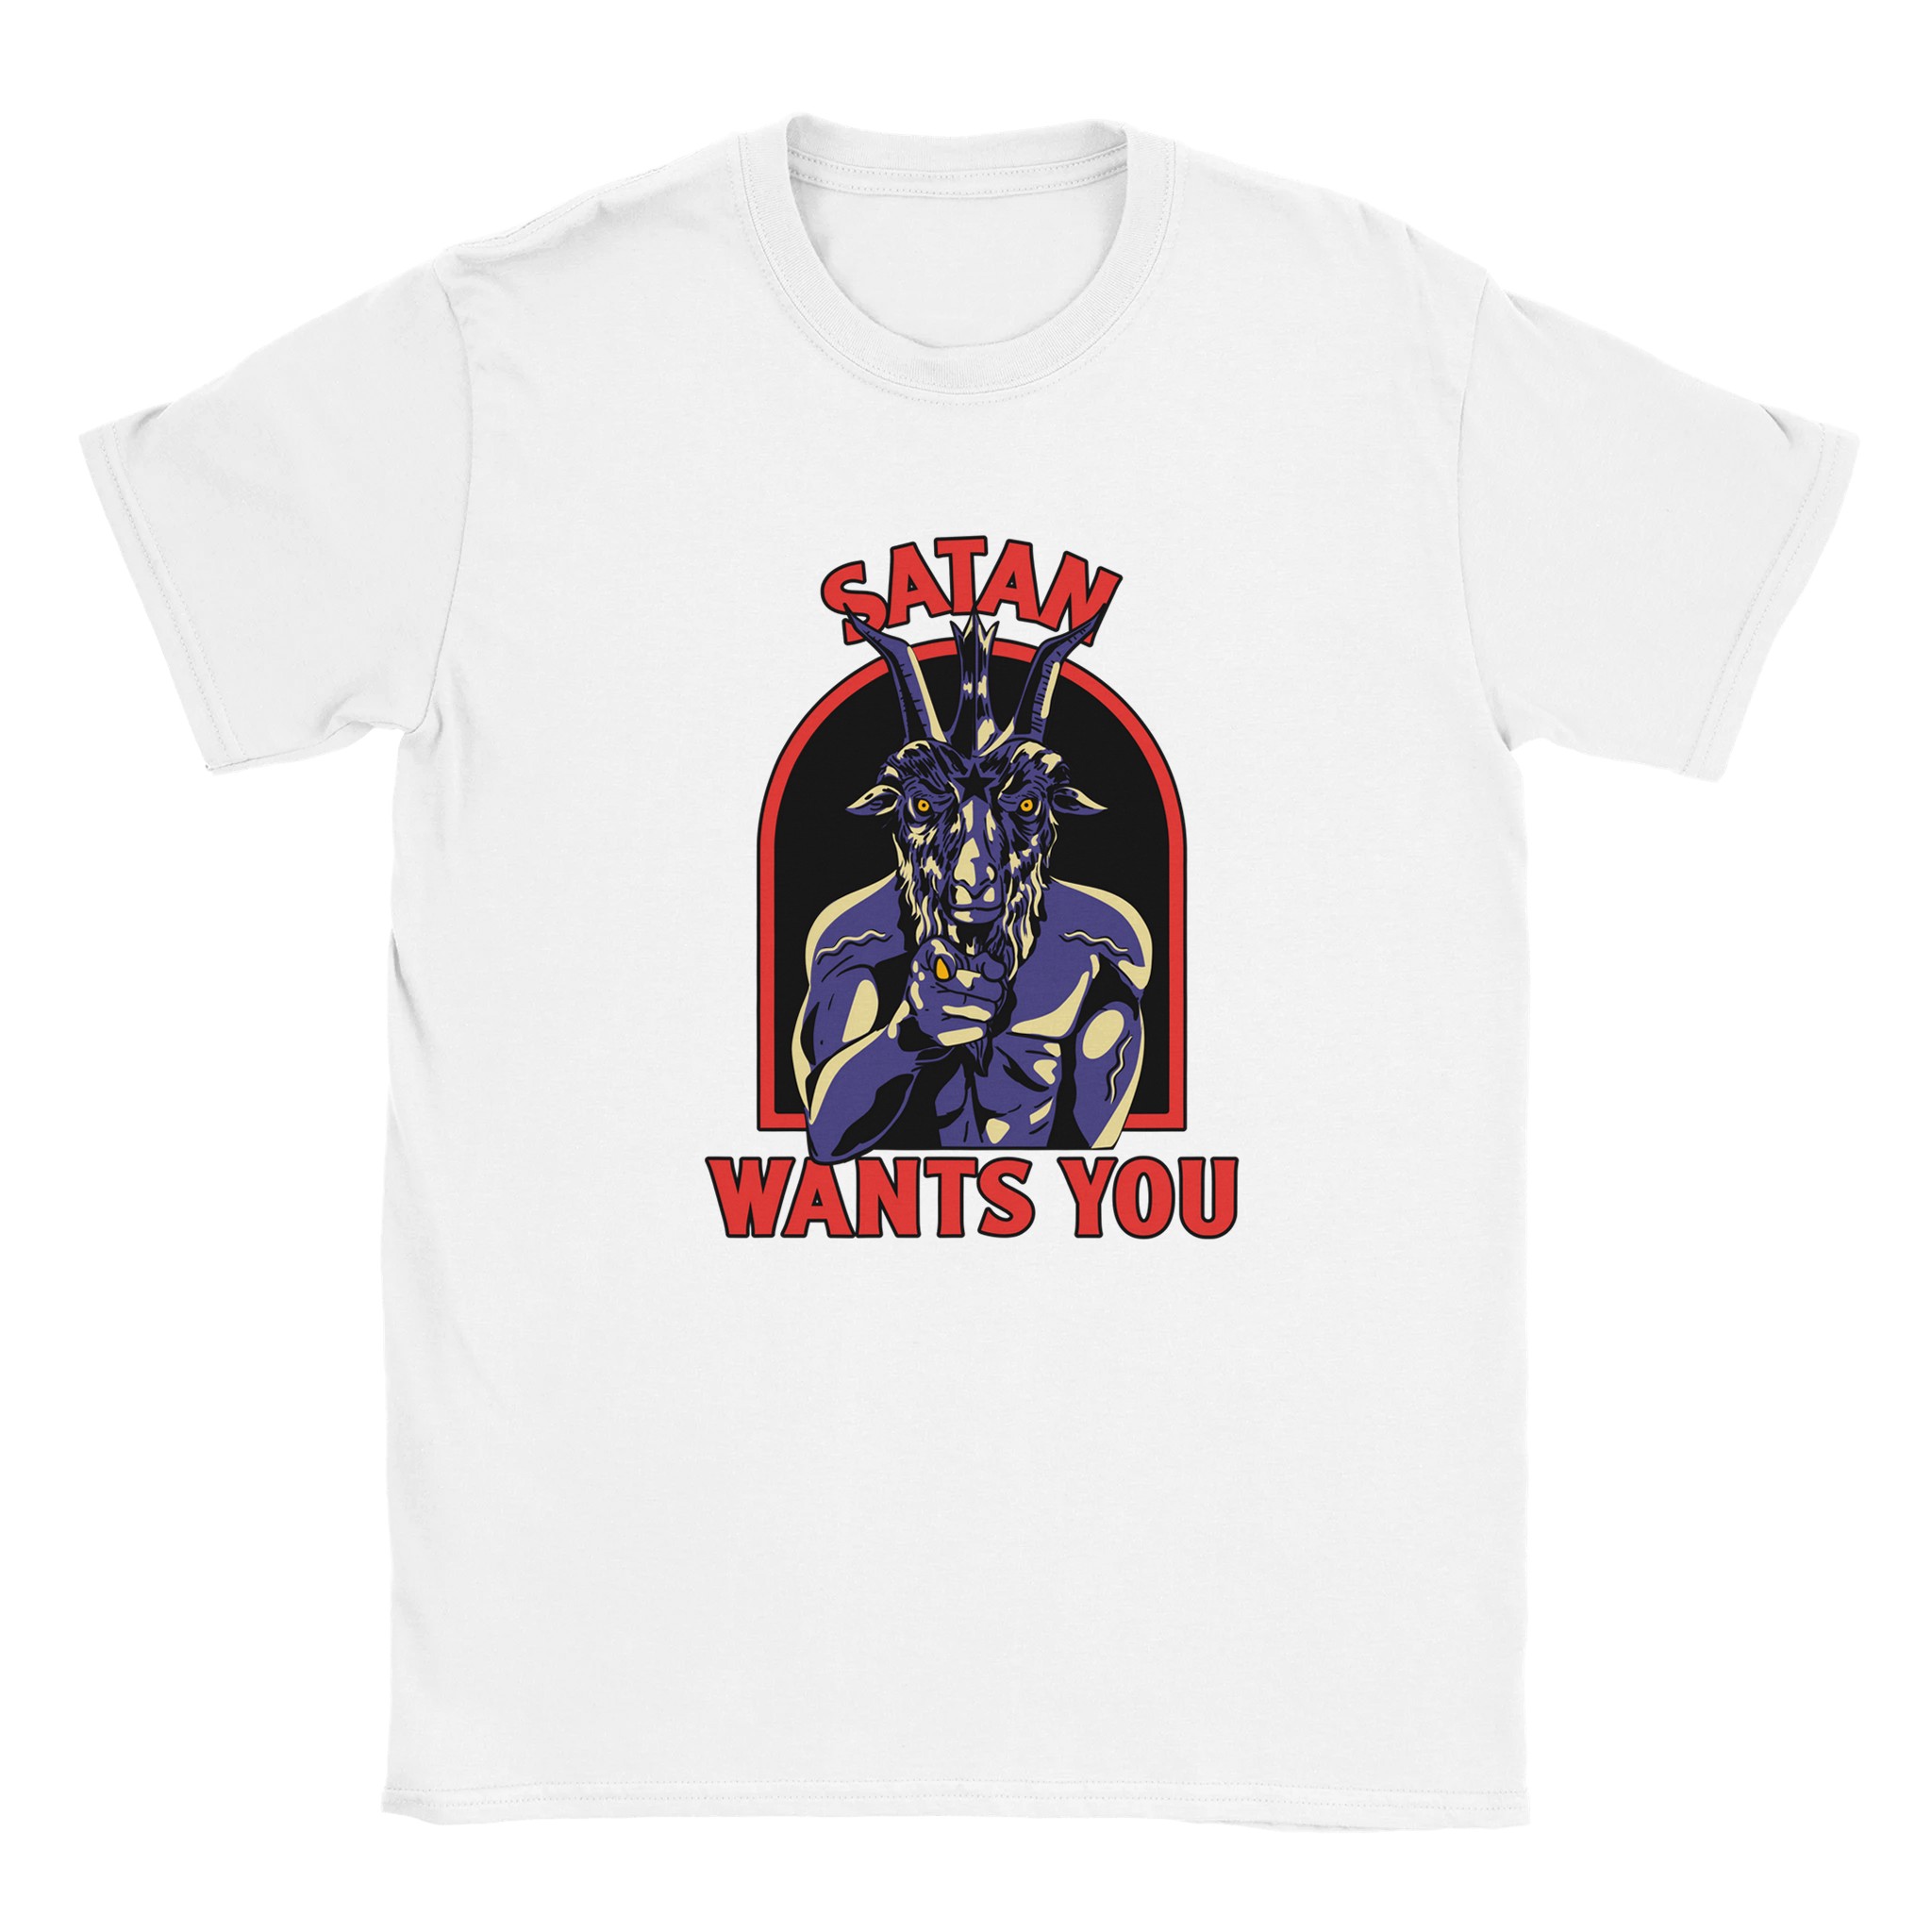 Satan wants you tshirt design